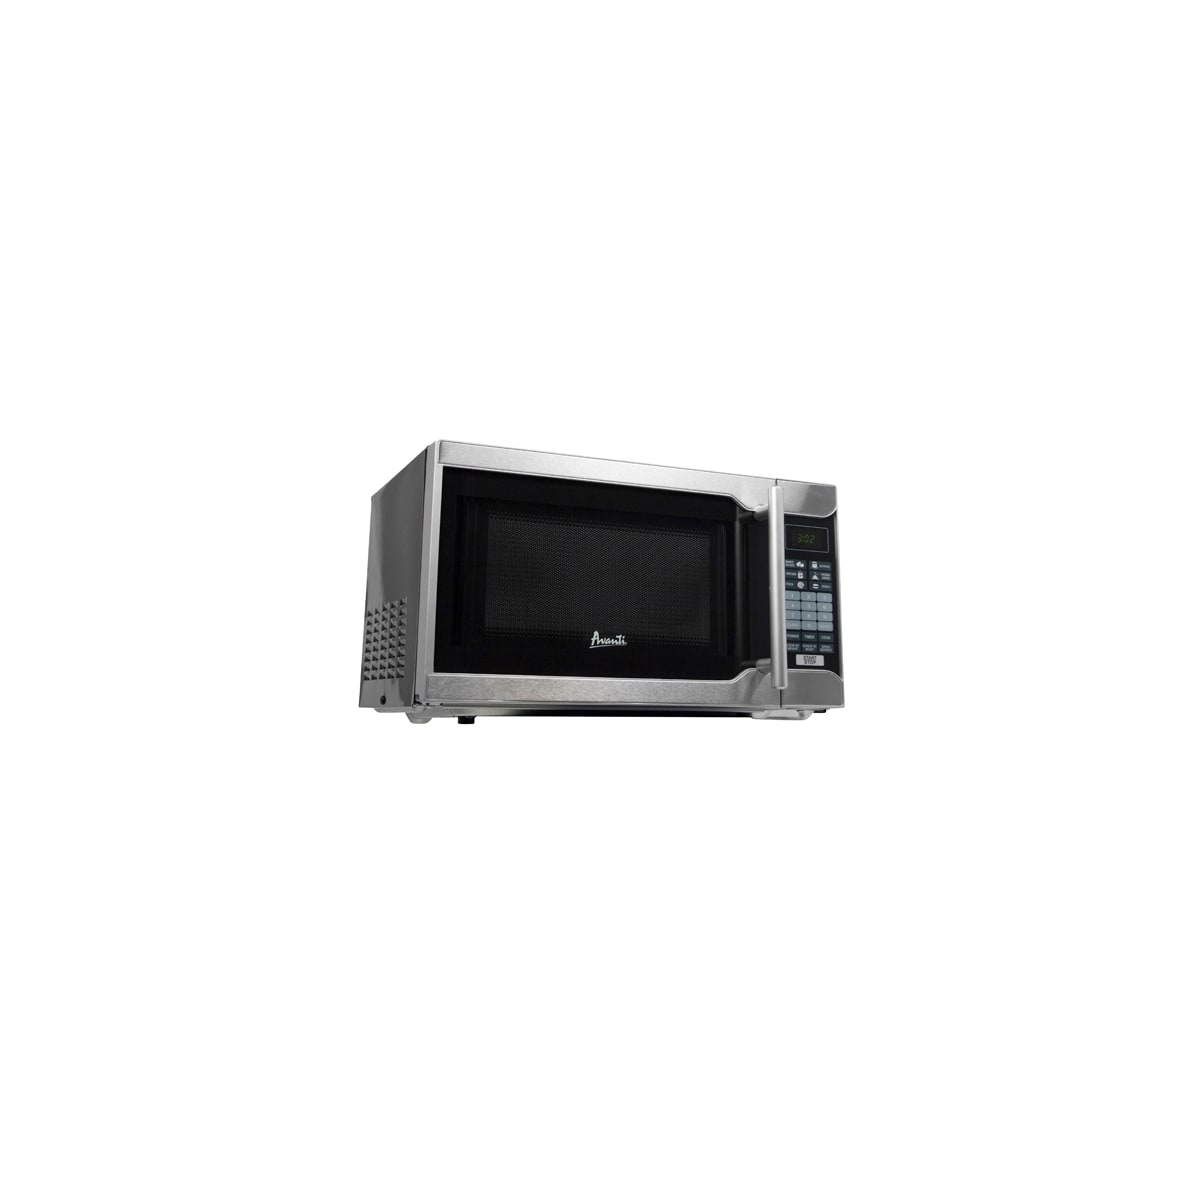 Avanti 0.7 Cu. Ft. 700W Microwave Oven, White